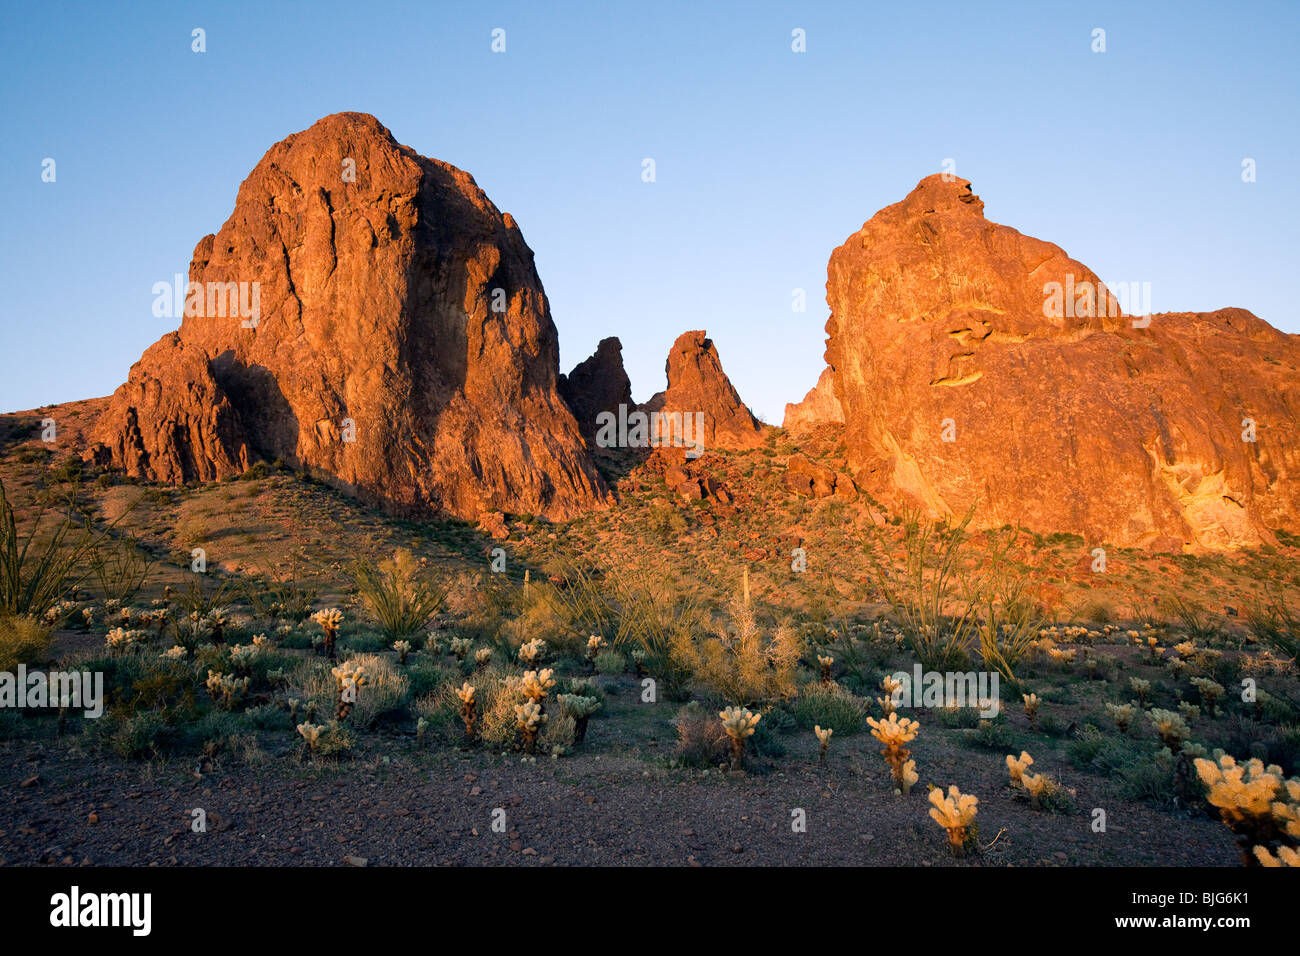 Monolithes de roche, KOFA Wildlife Refuge, Arizona Banque D'Images